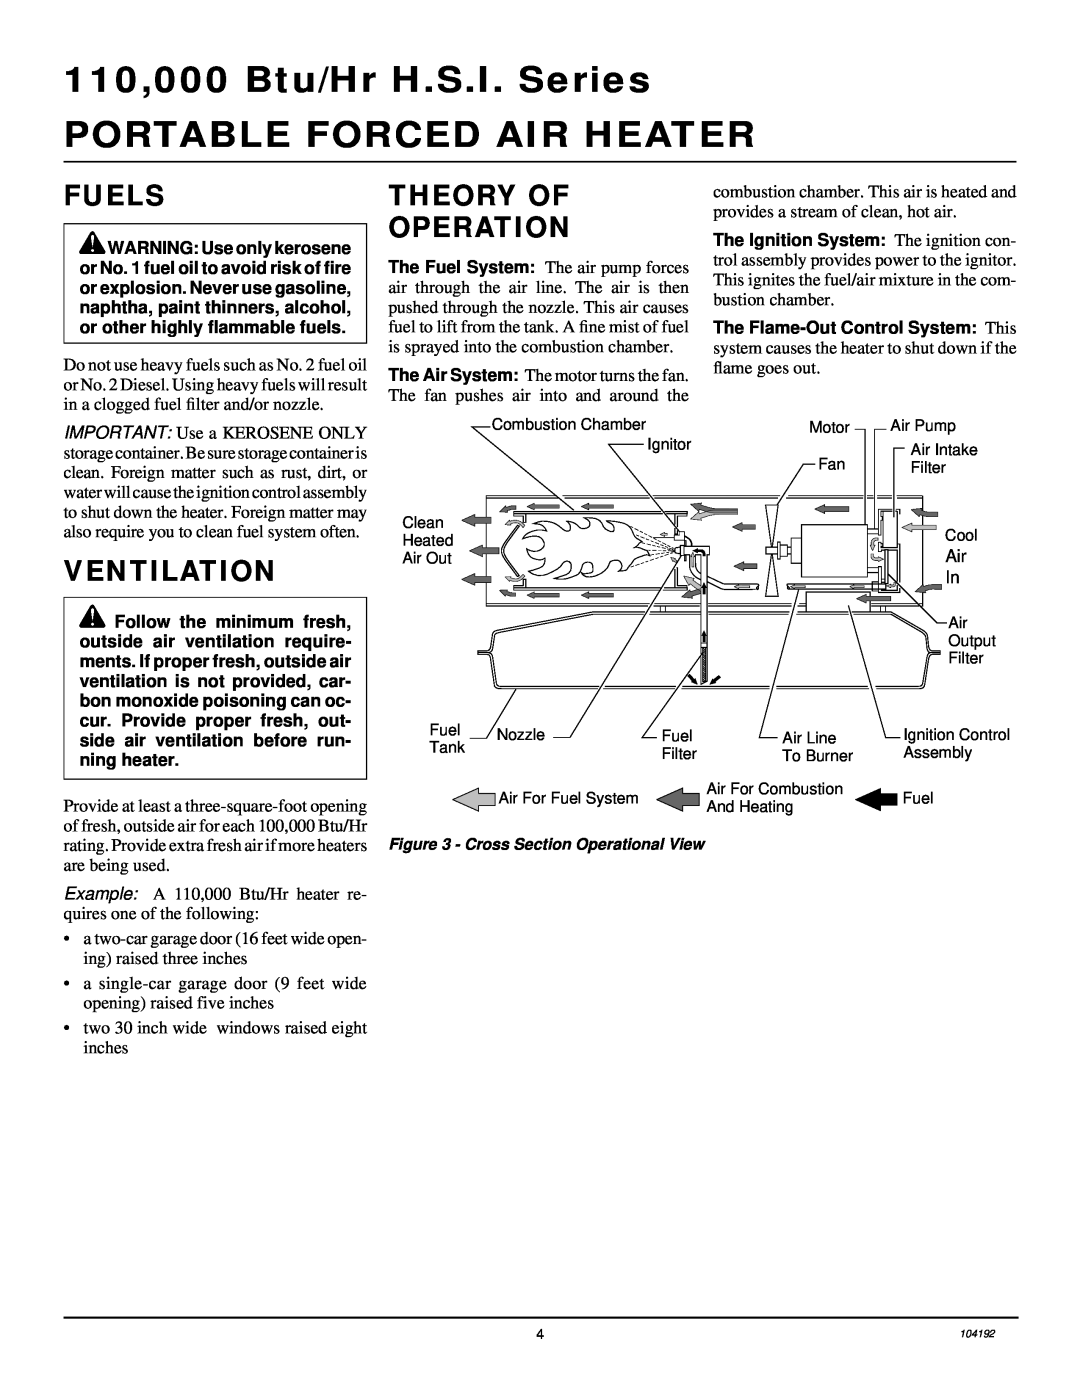 Desa REM110BT, R110BT Fuels, Theory Of Operation, Ventilation, 110,000 Btu/Hr H.S.I. Series, Portable Forced Air Heater 